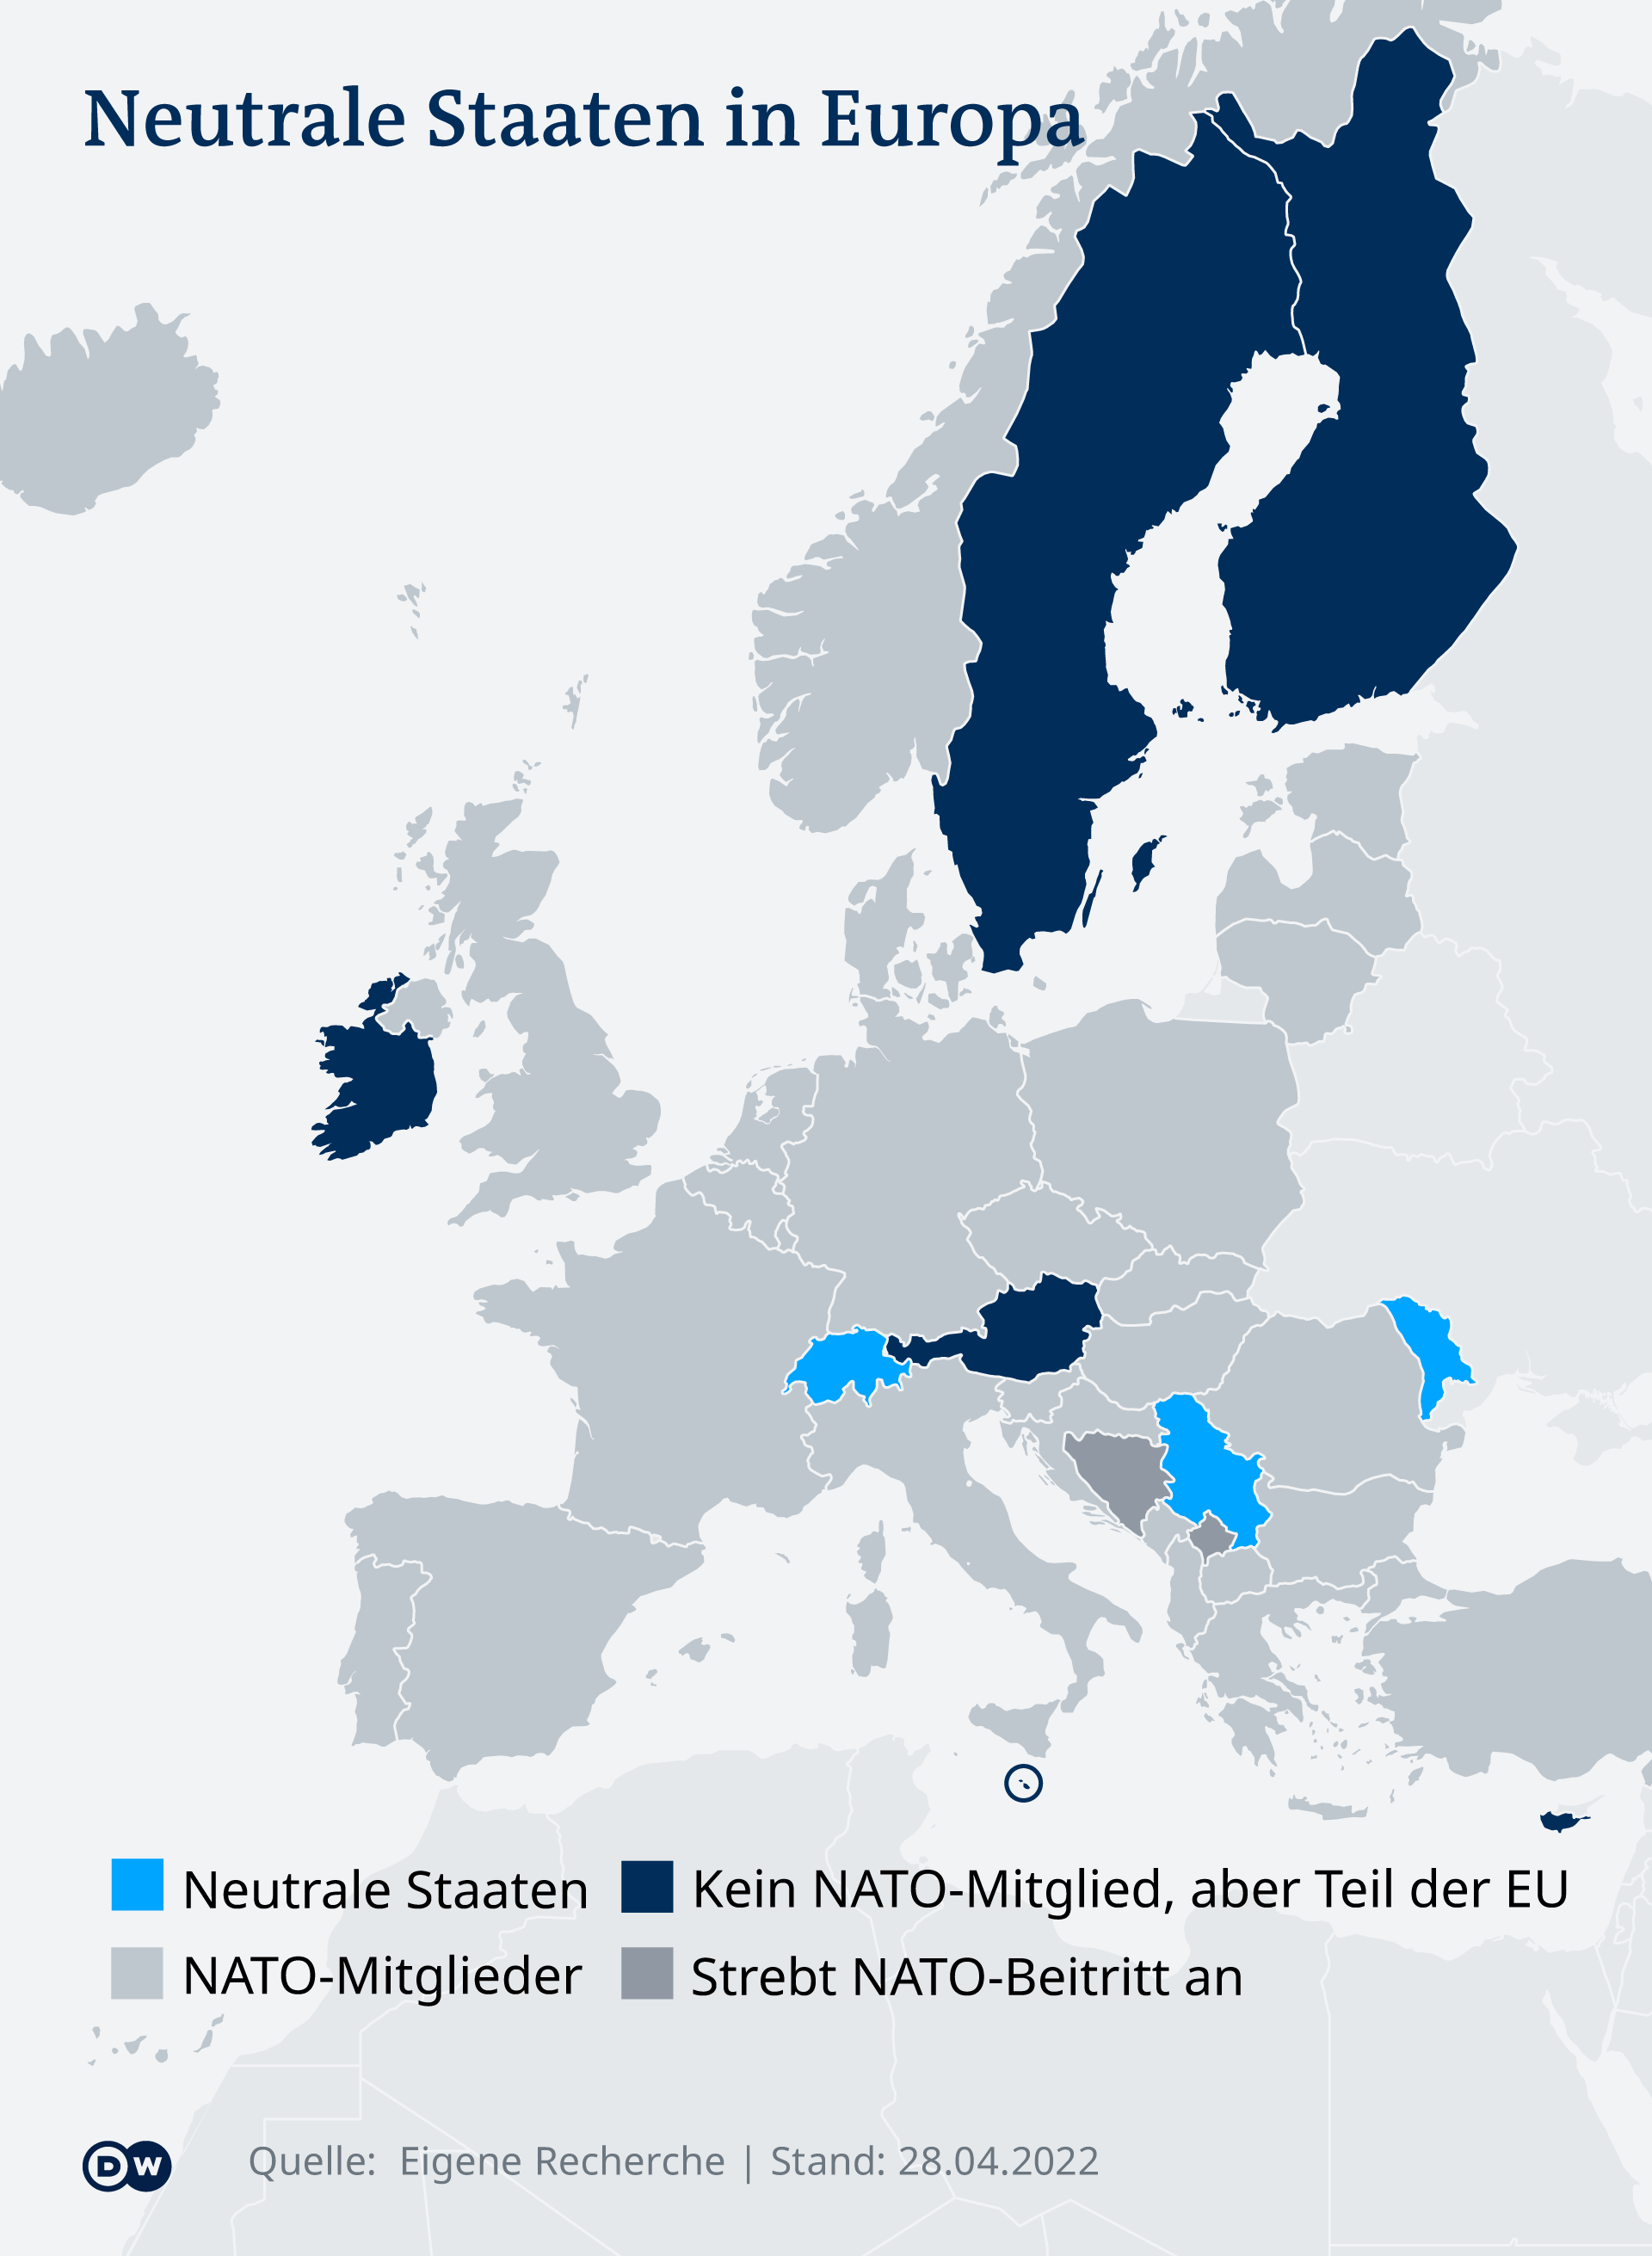 Članice NATO-a i neutralne zemlje u Europi